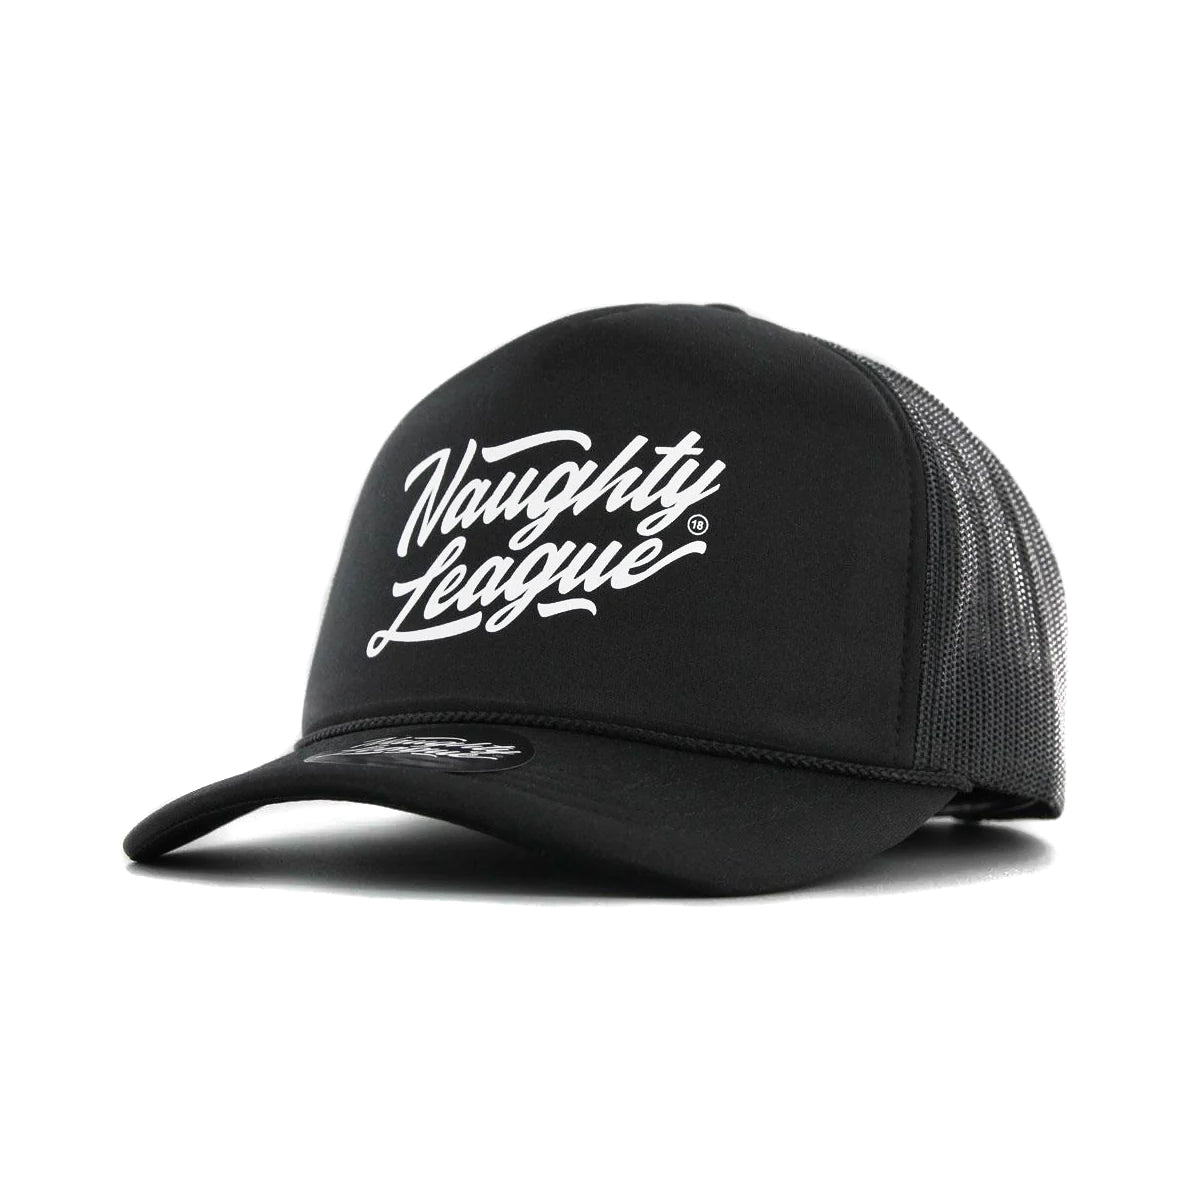 Naughty League Branded Trucker cap black - Shop-Tetuan